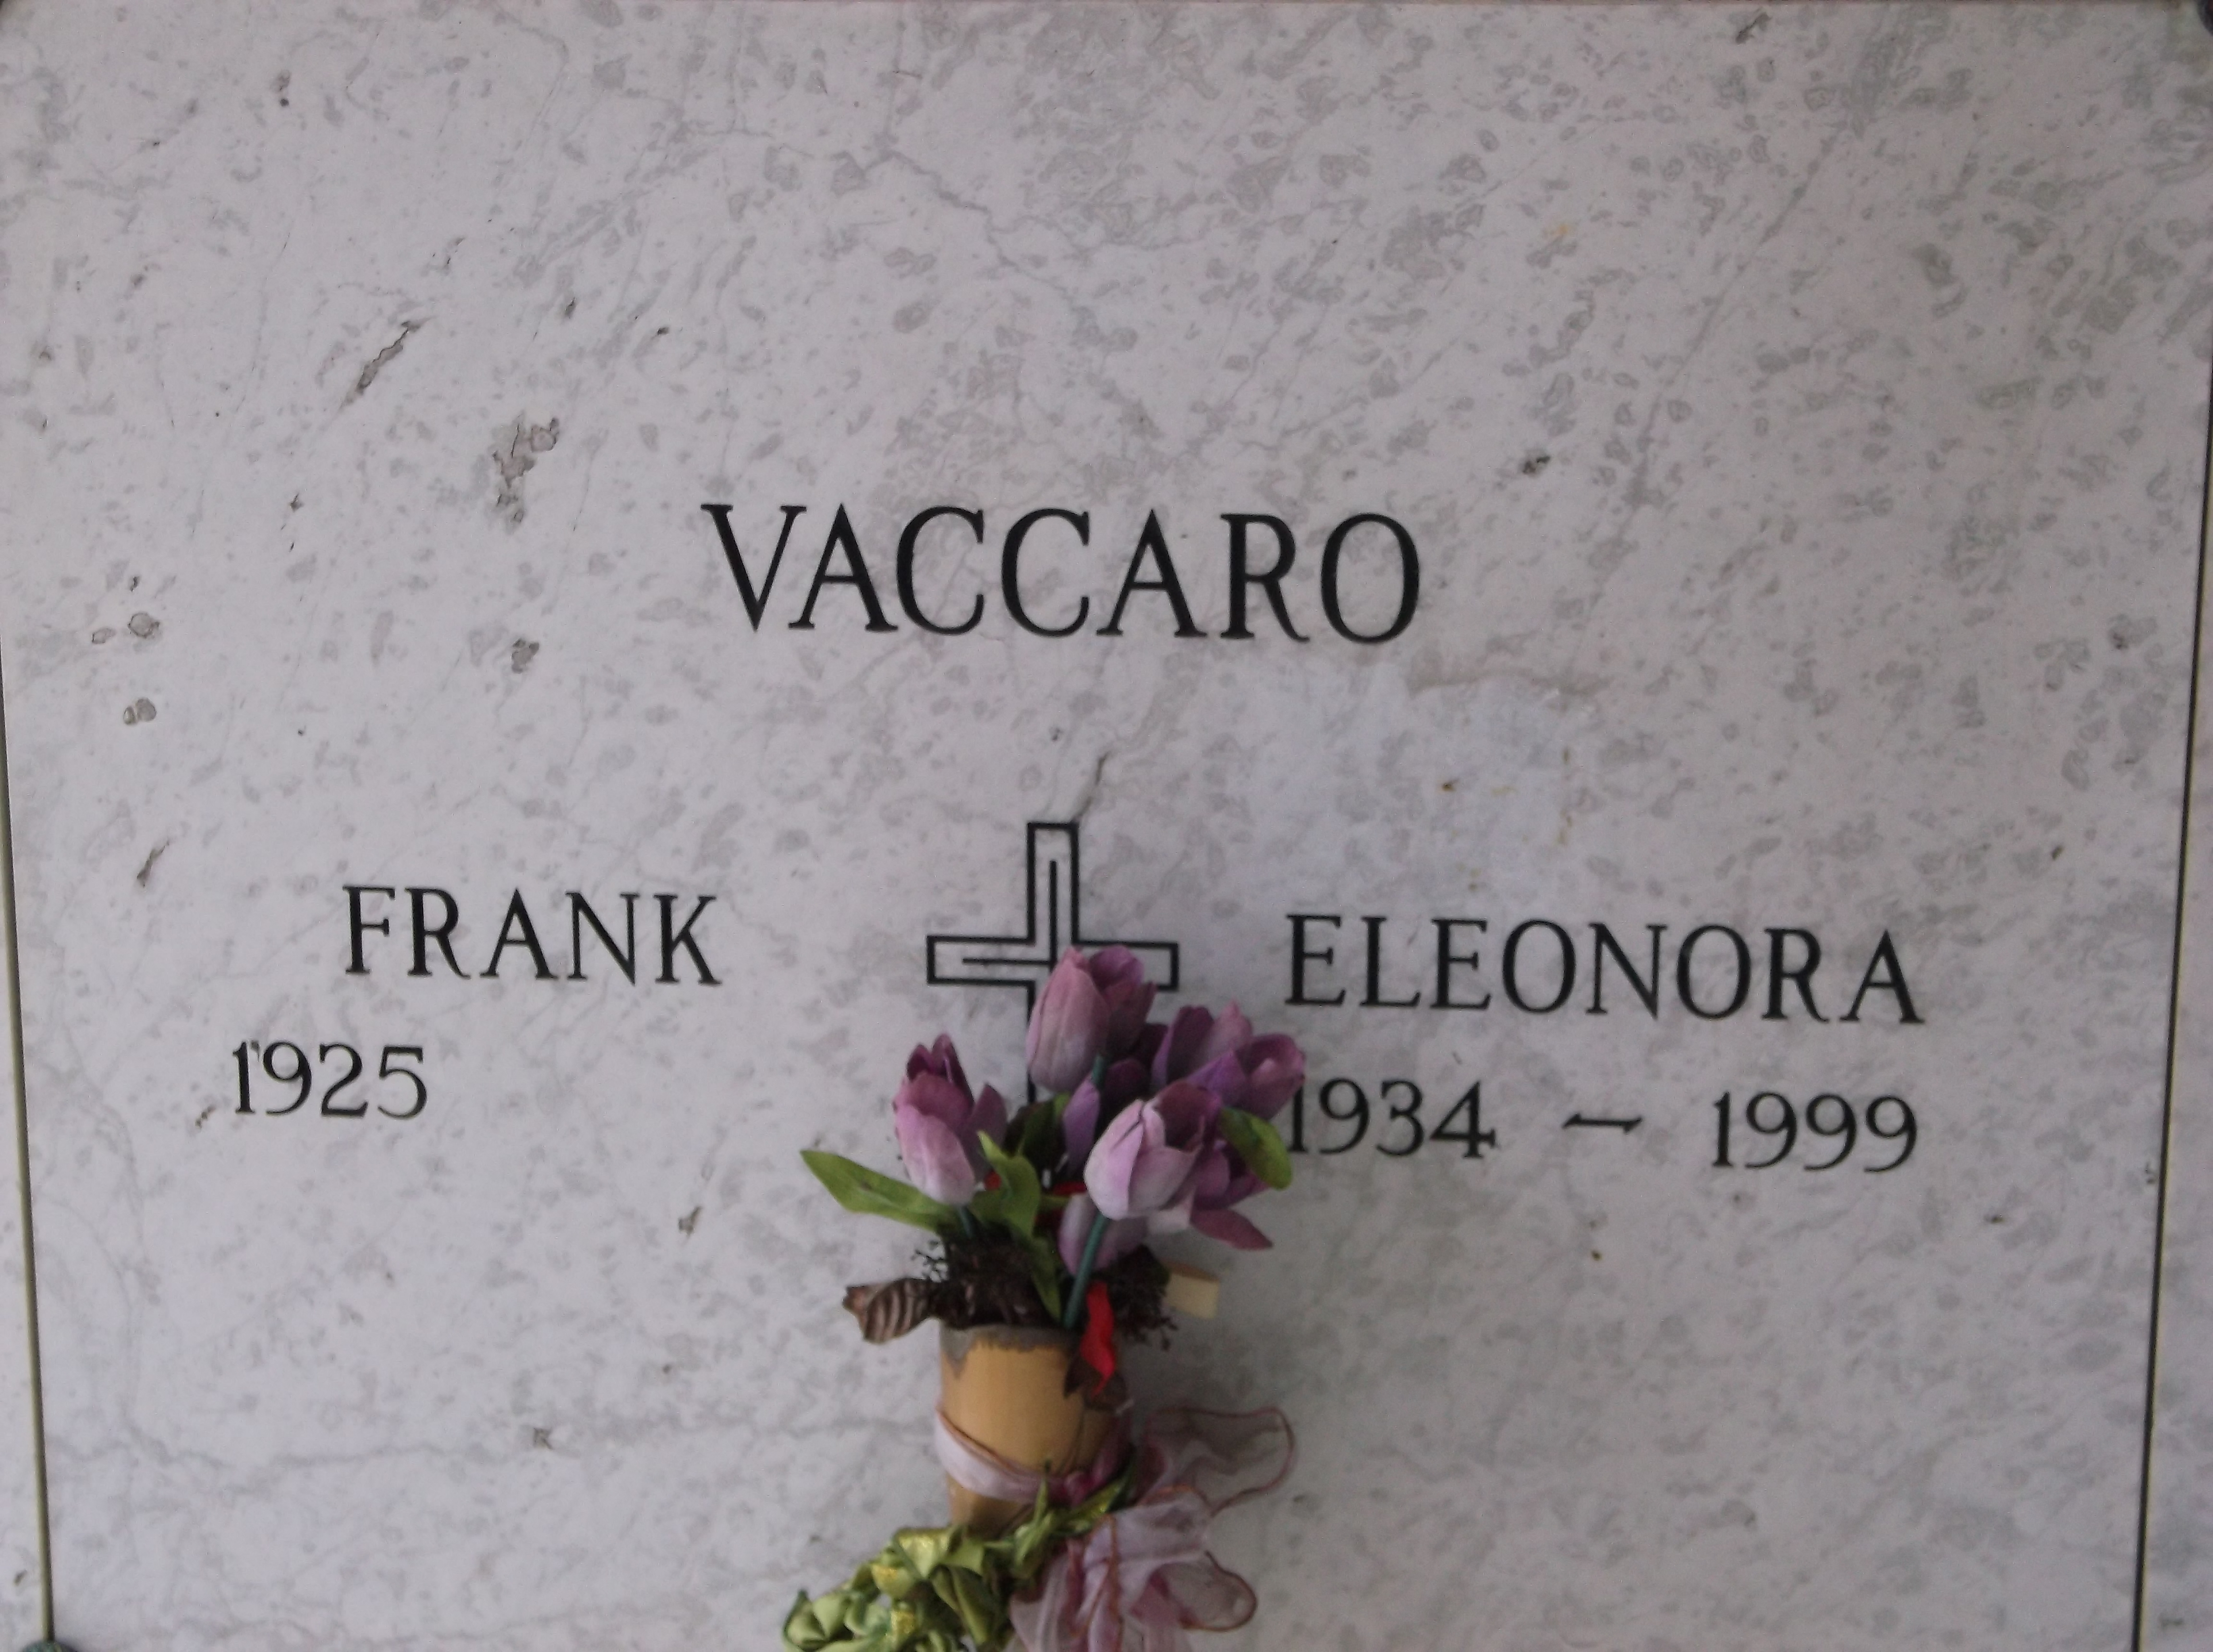 Frank Vaccaro